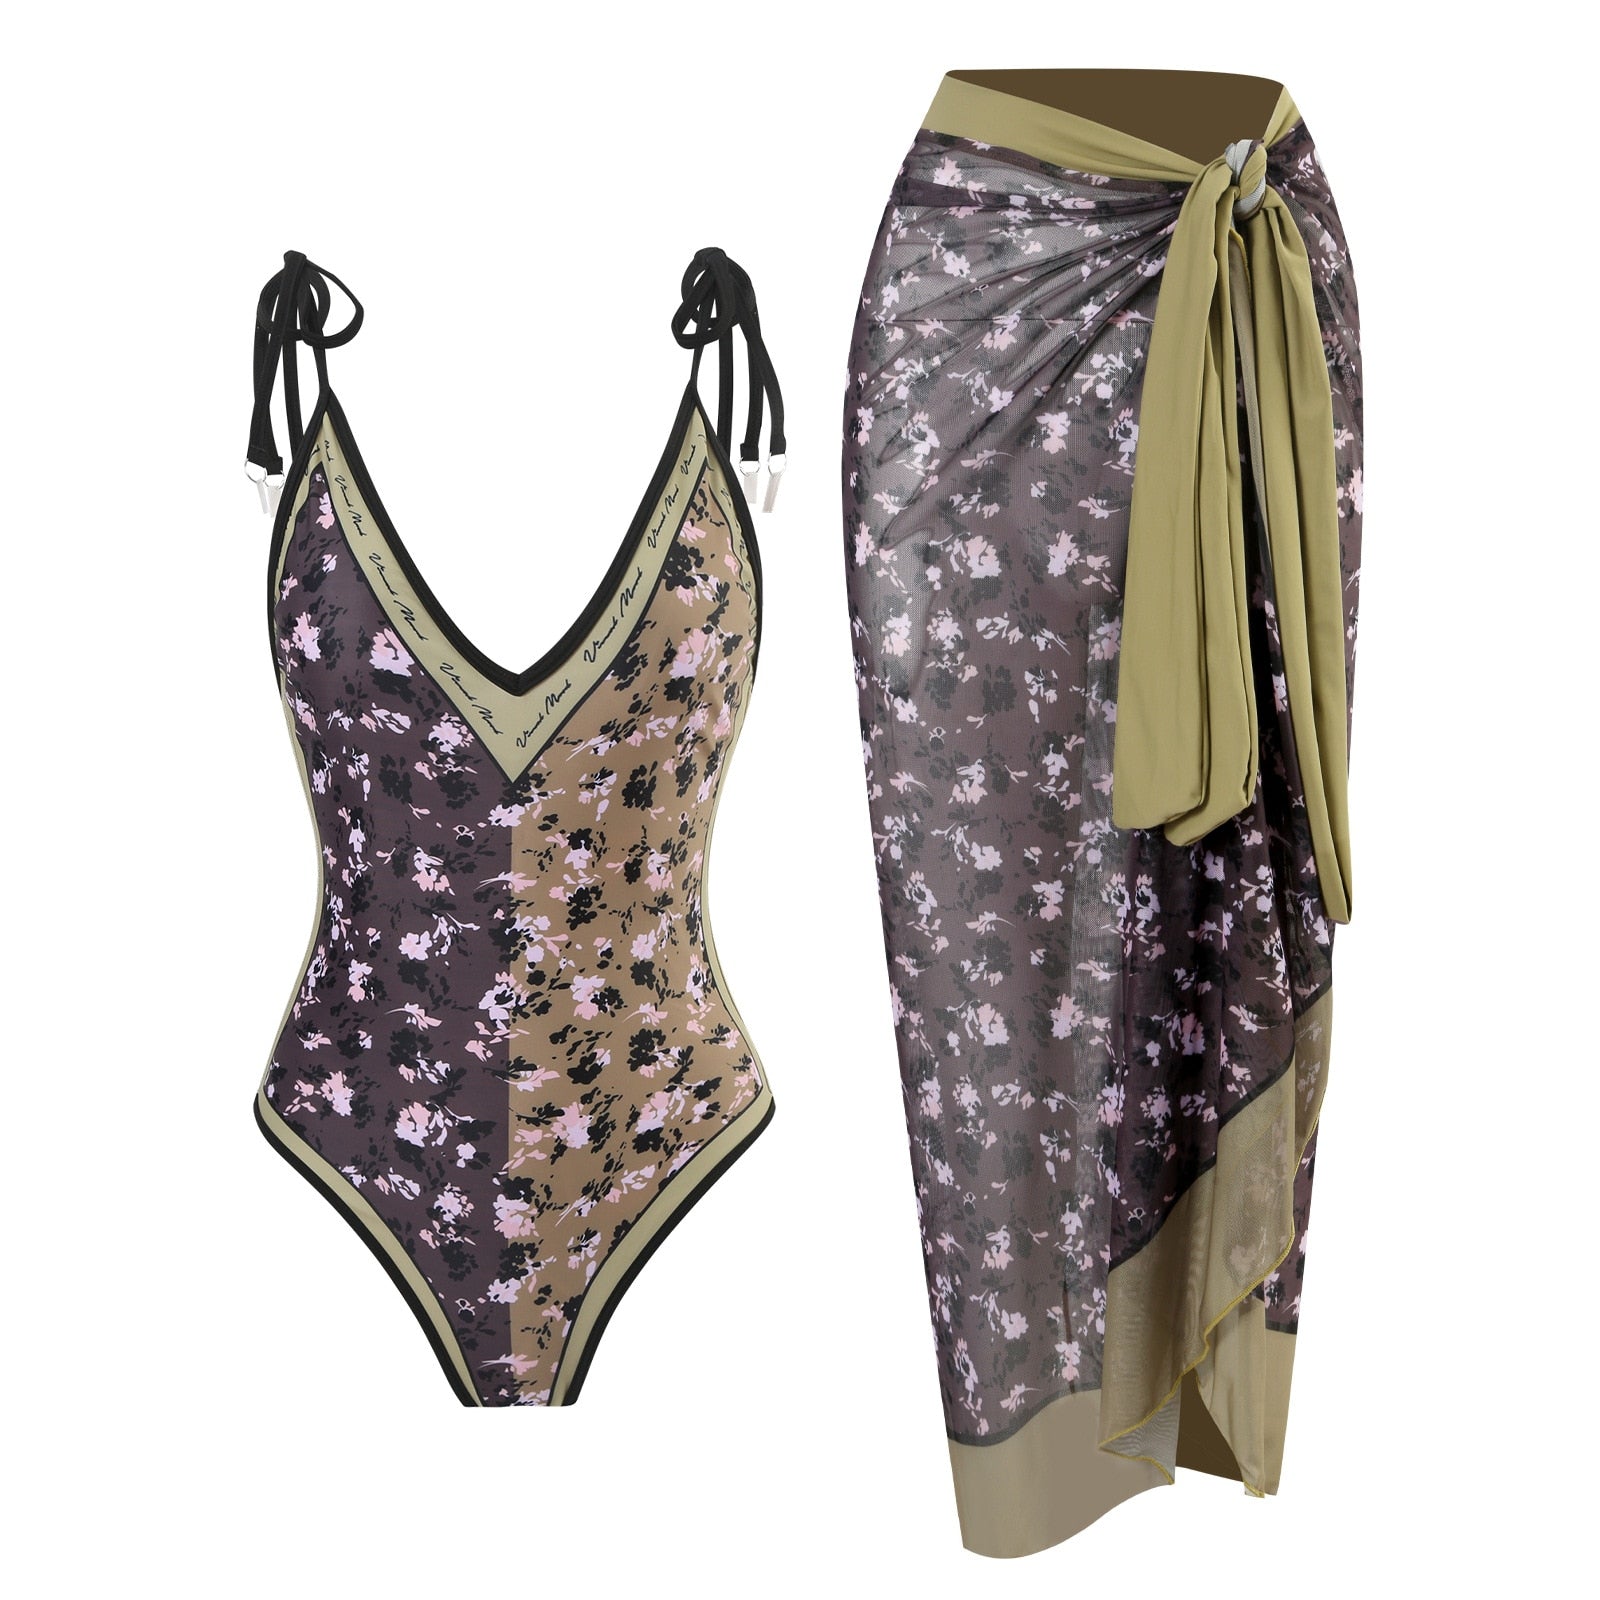 New 2-Piece Women Bikini Set Push Up Floral Printed Ruffle Bikinis Strappy Bandage Swimwear Brazilian Biquini Bathing Suit QJY99G2